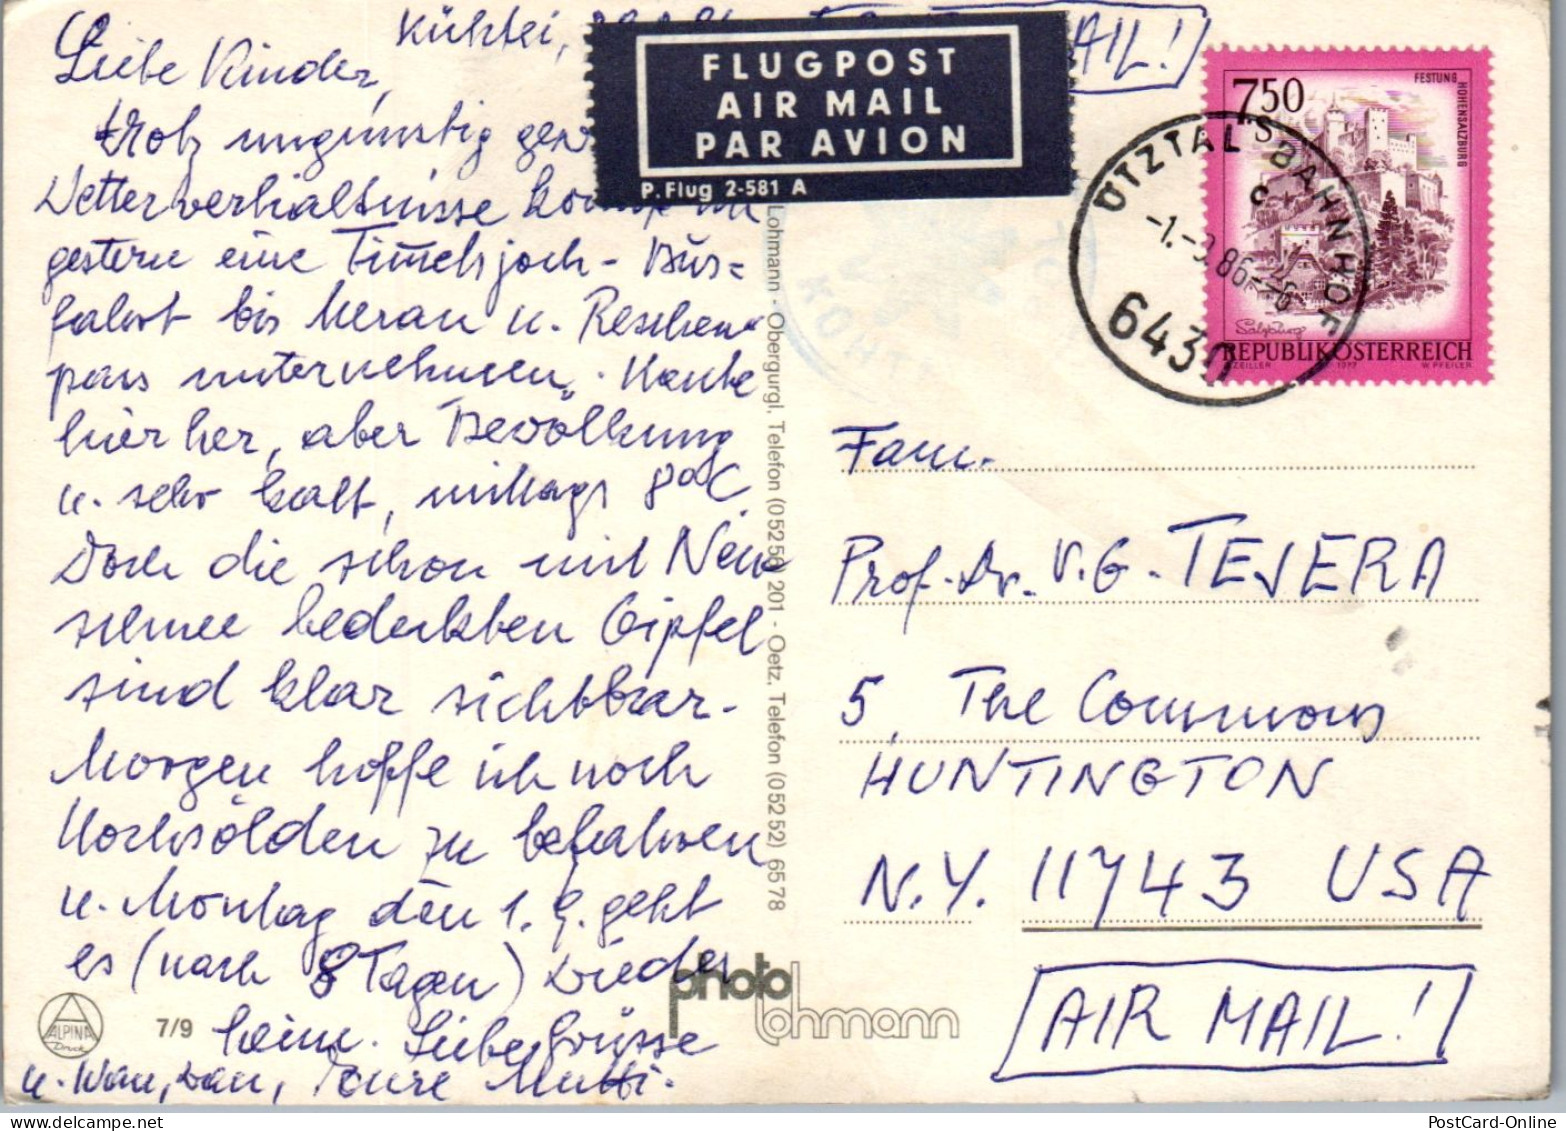 47541 - Tirol - Kühtai , Mehrbildkarte , Flugpost - Gelaufen 1986 - Imst